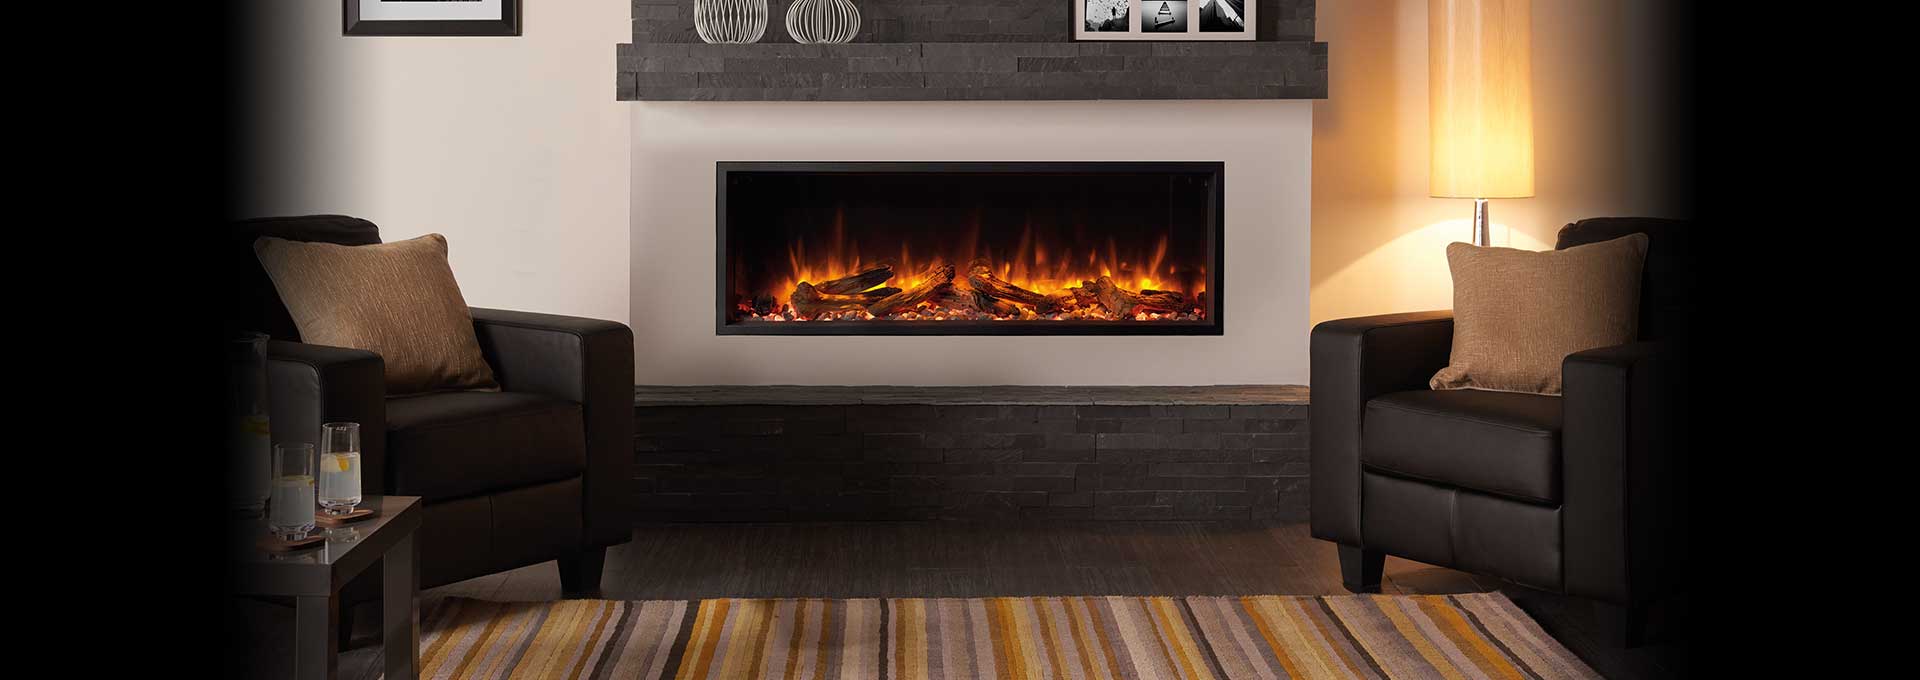 Benefits of Gazco eReflex Electric Fireplaces 